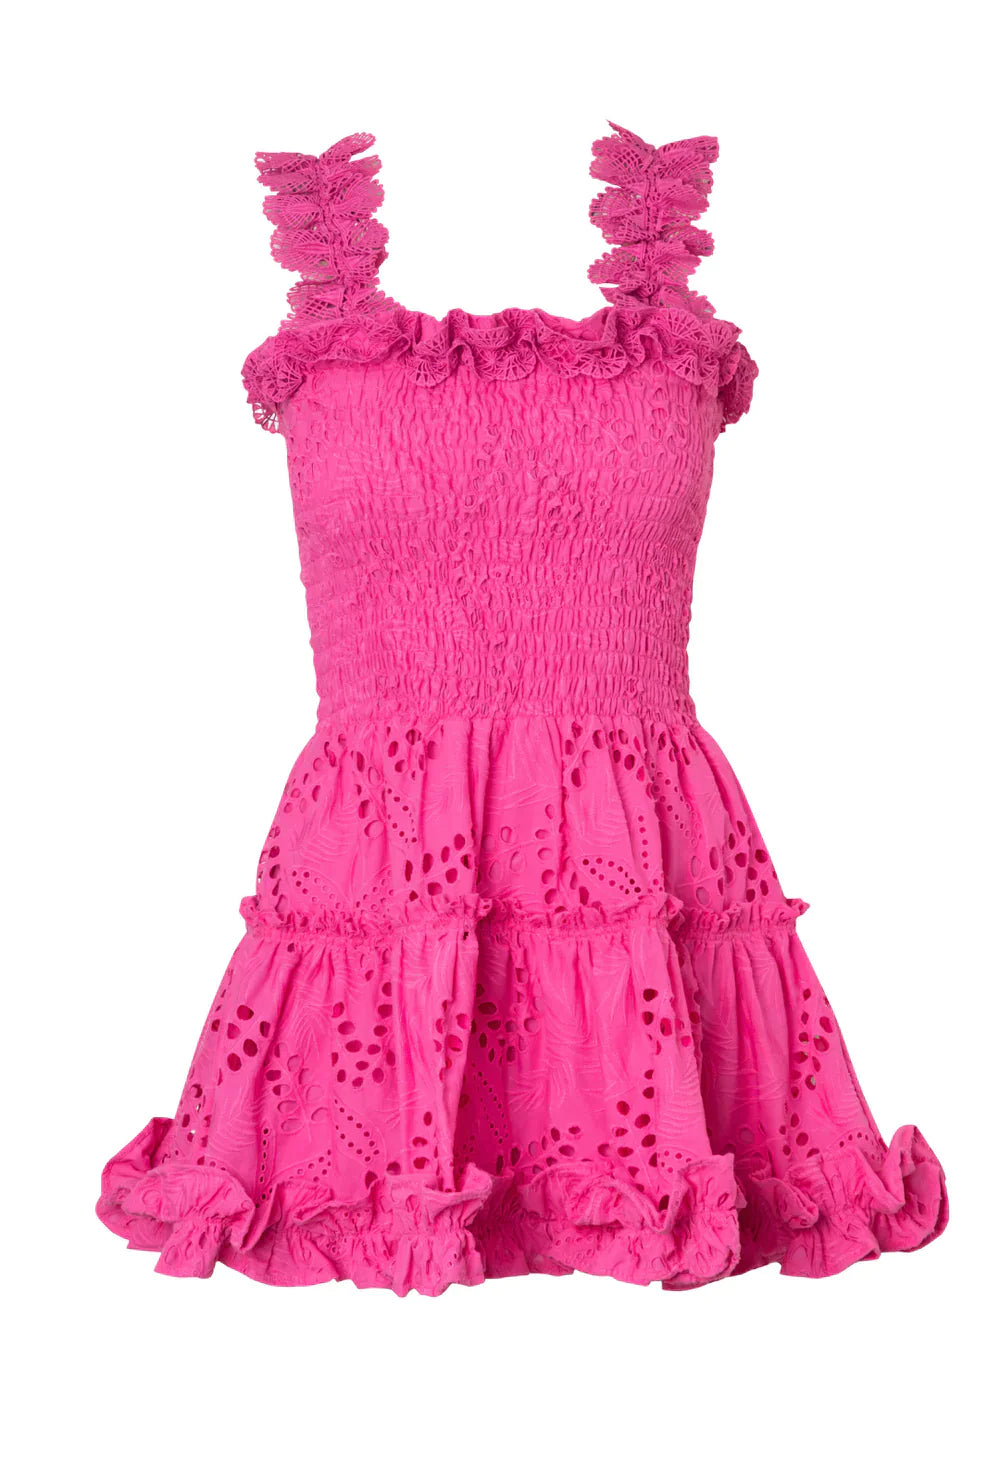 Waimari Pamela Dress - Premium Short dress from Marina St Barth - Just $325! Shop now at Marina St Barth